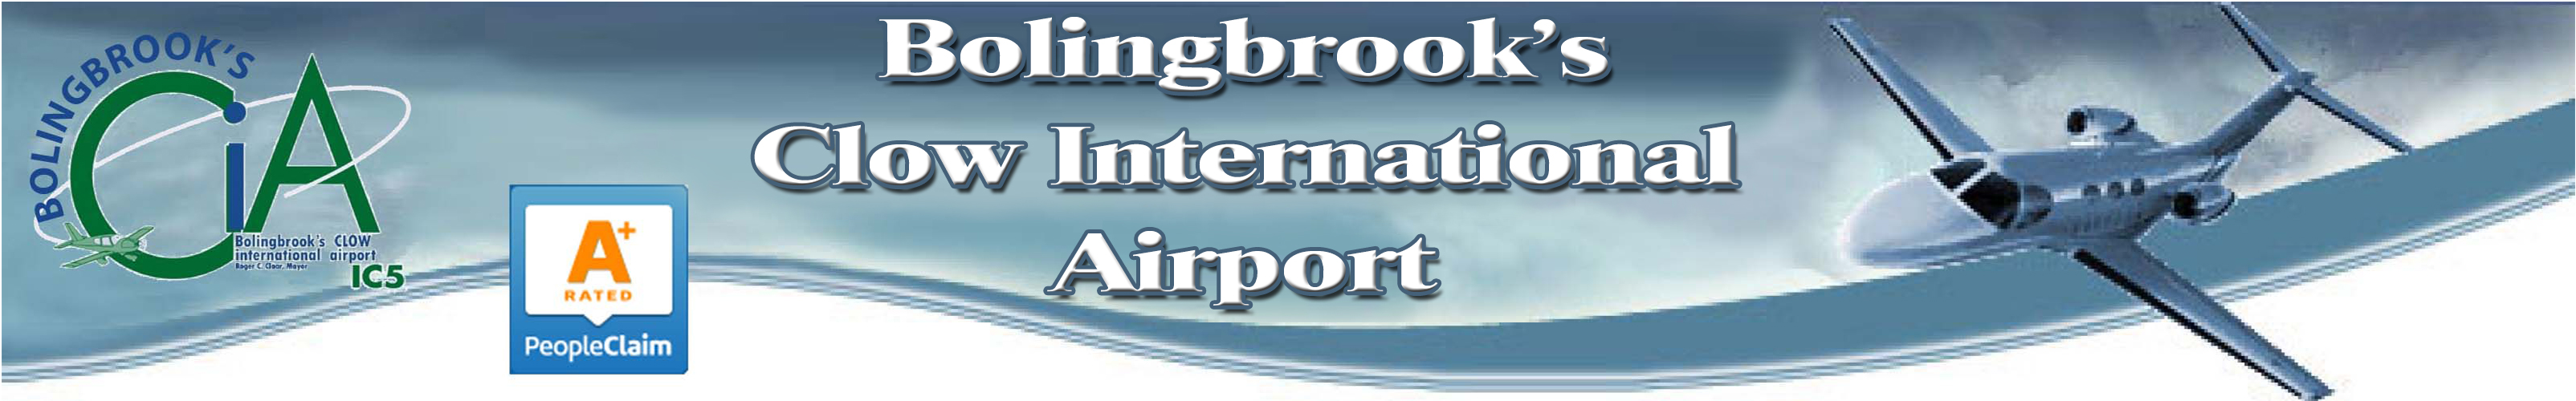 Clow International Airport Public Aviation